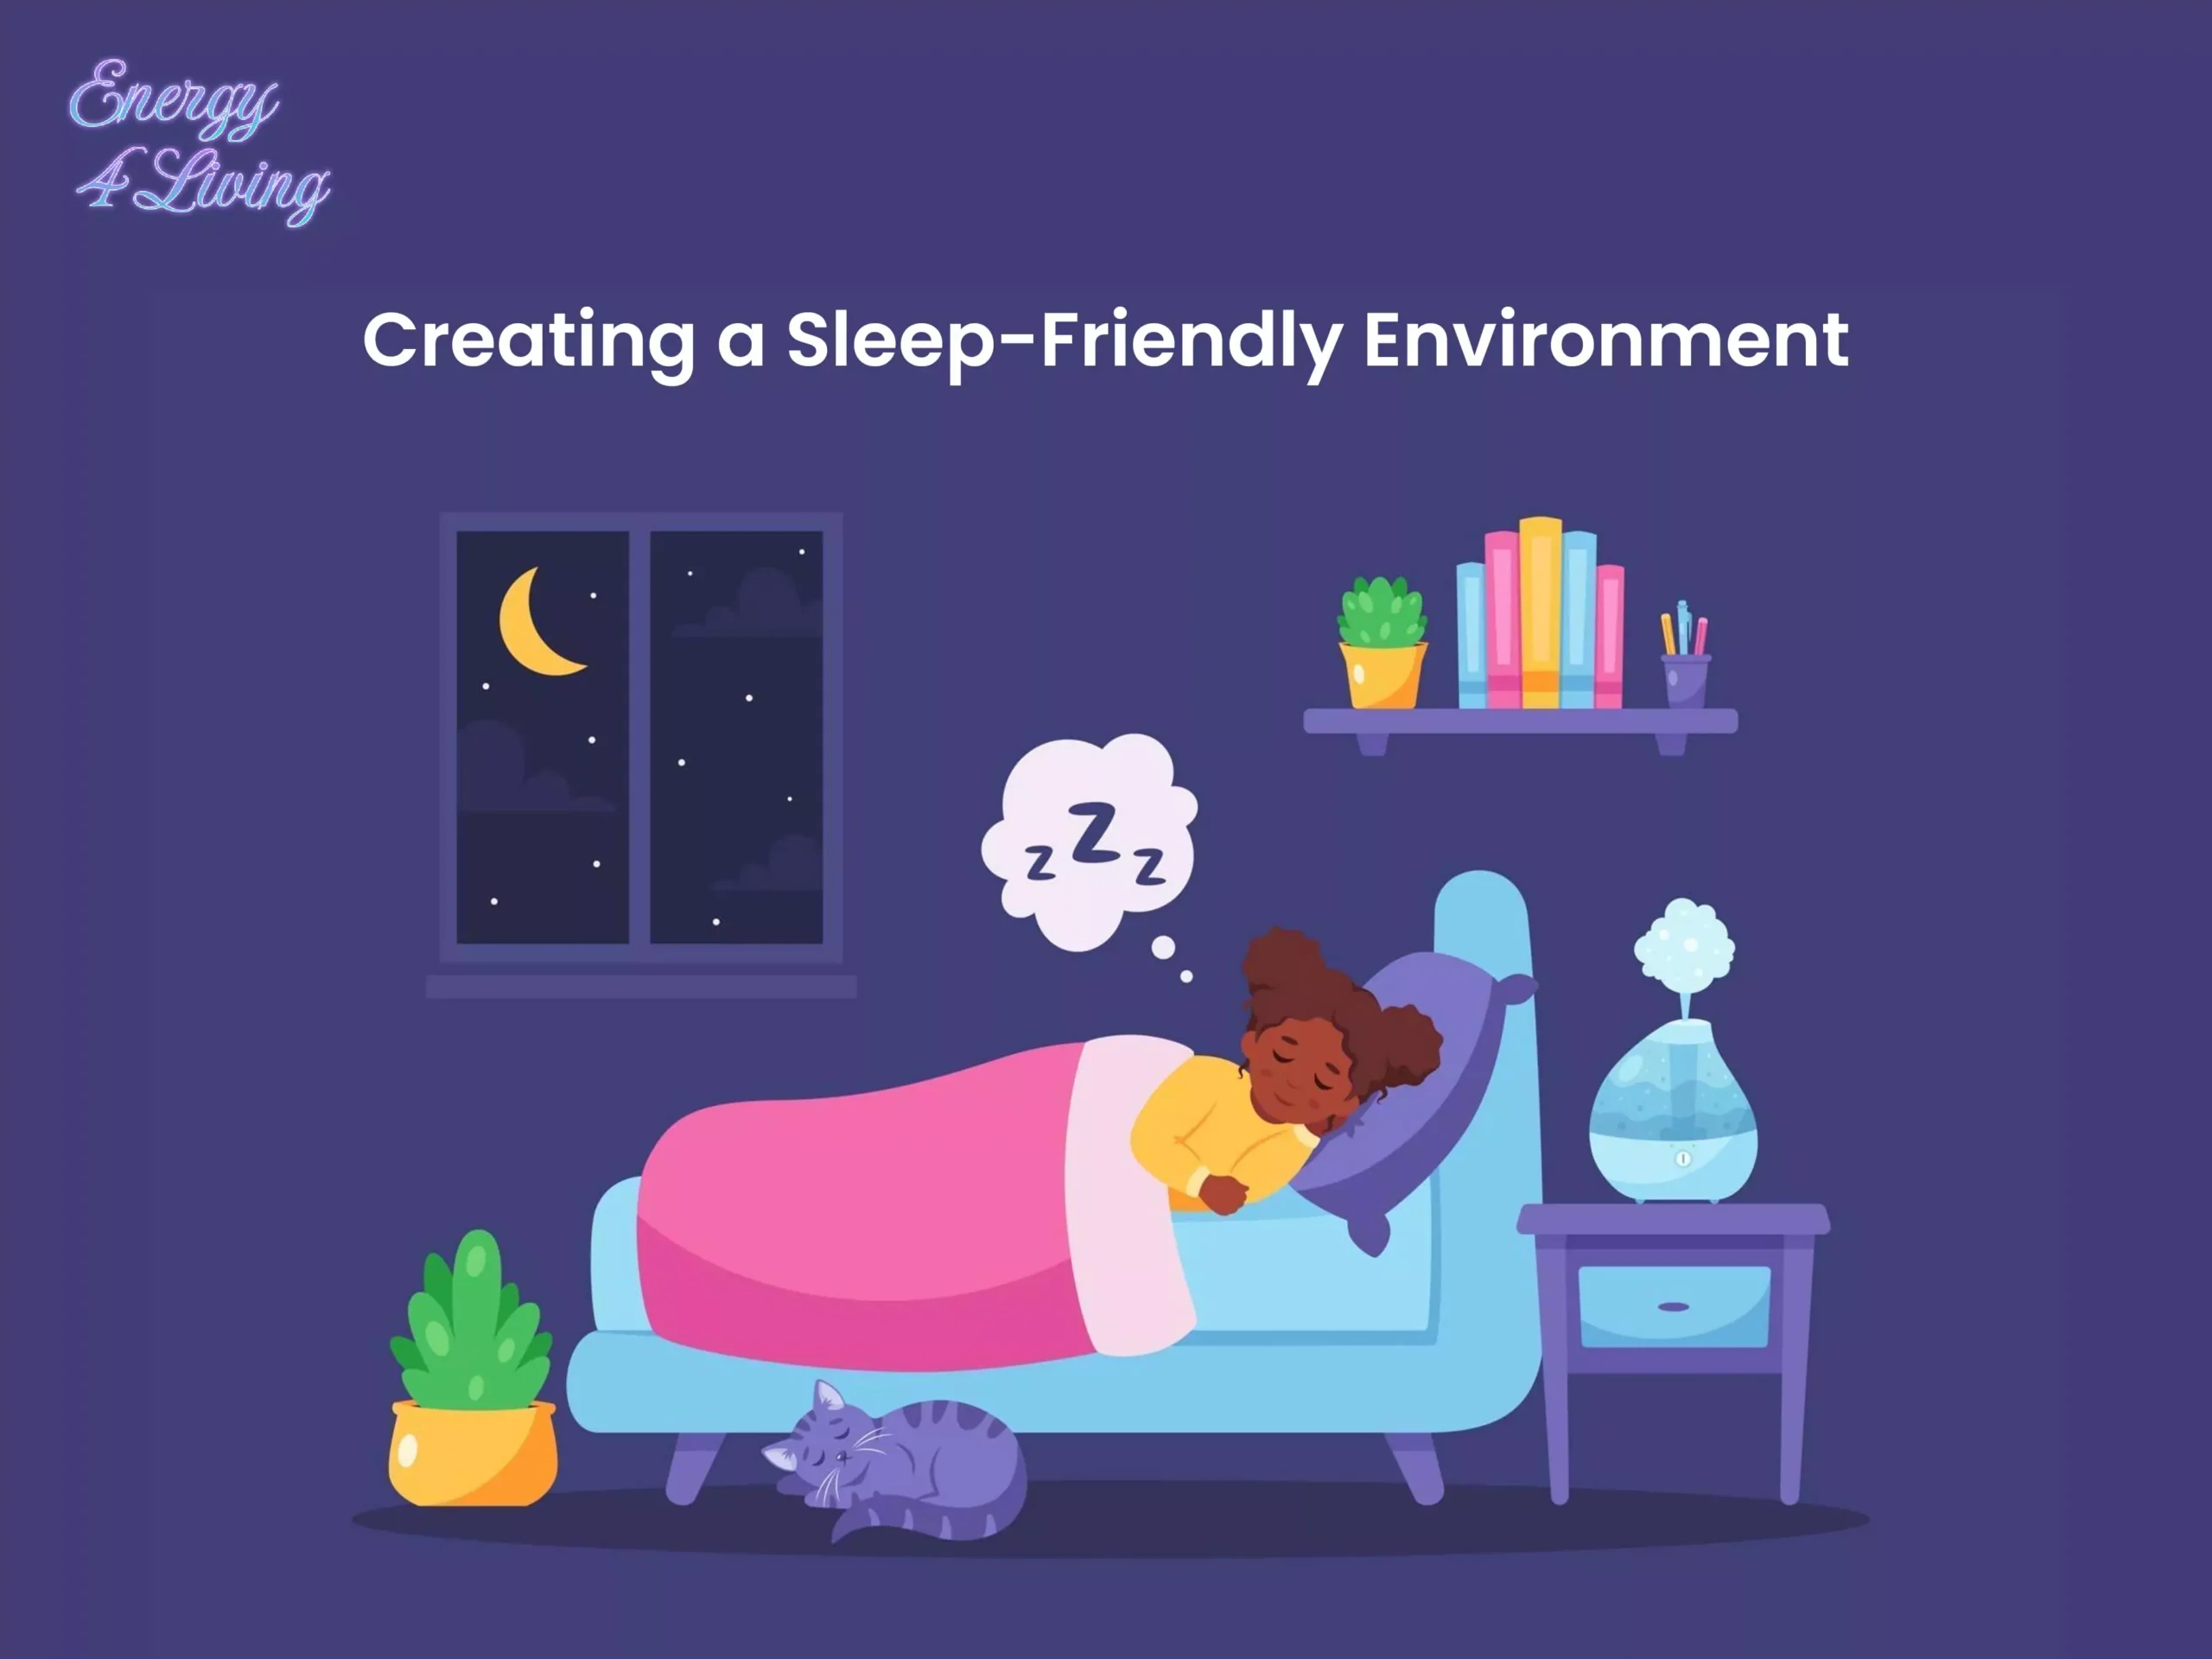 Creating a Sleep-Friendly Environment